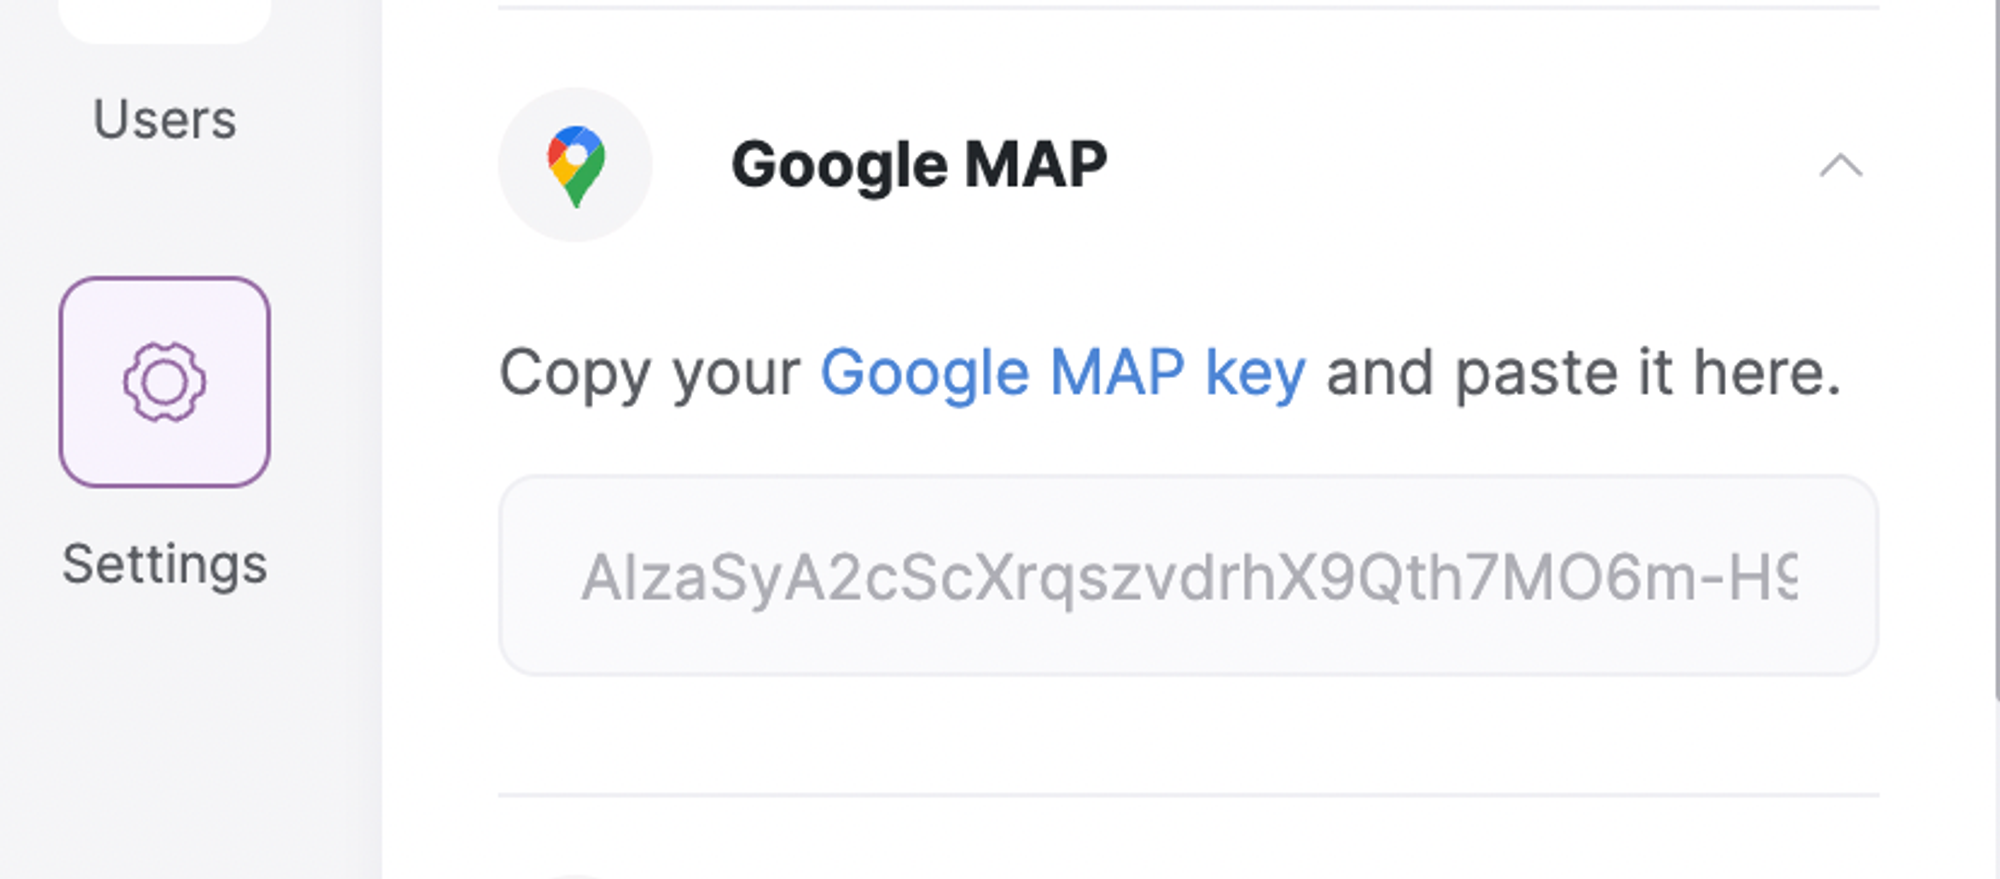 Adding the map API key